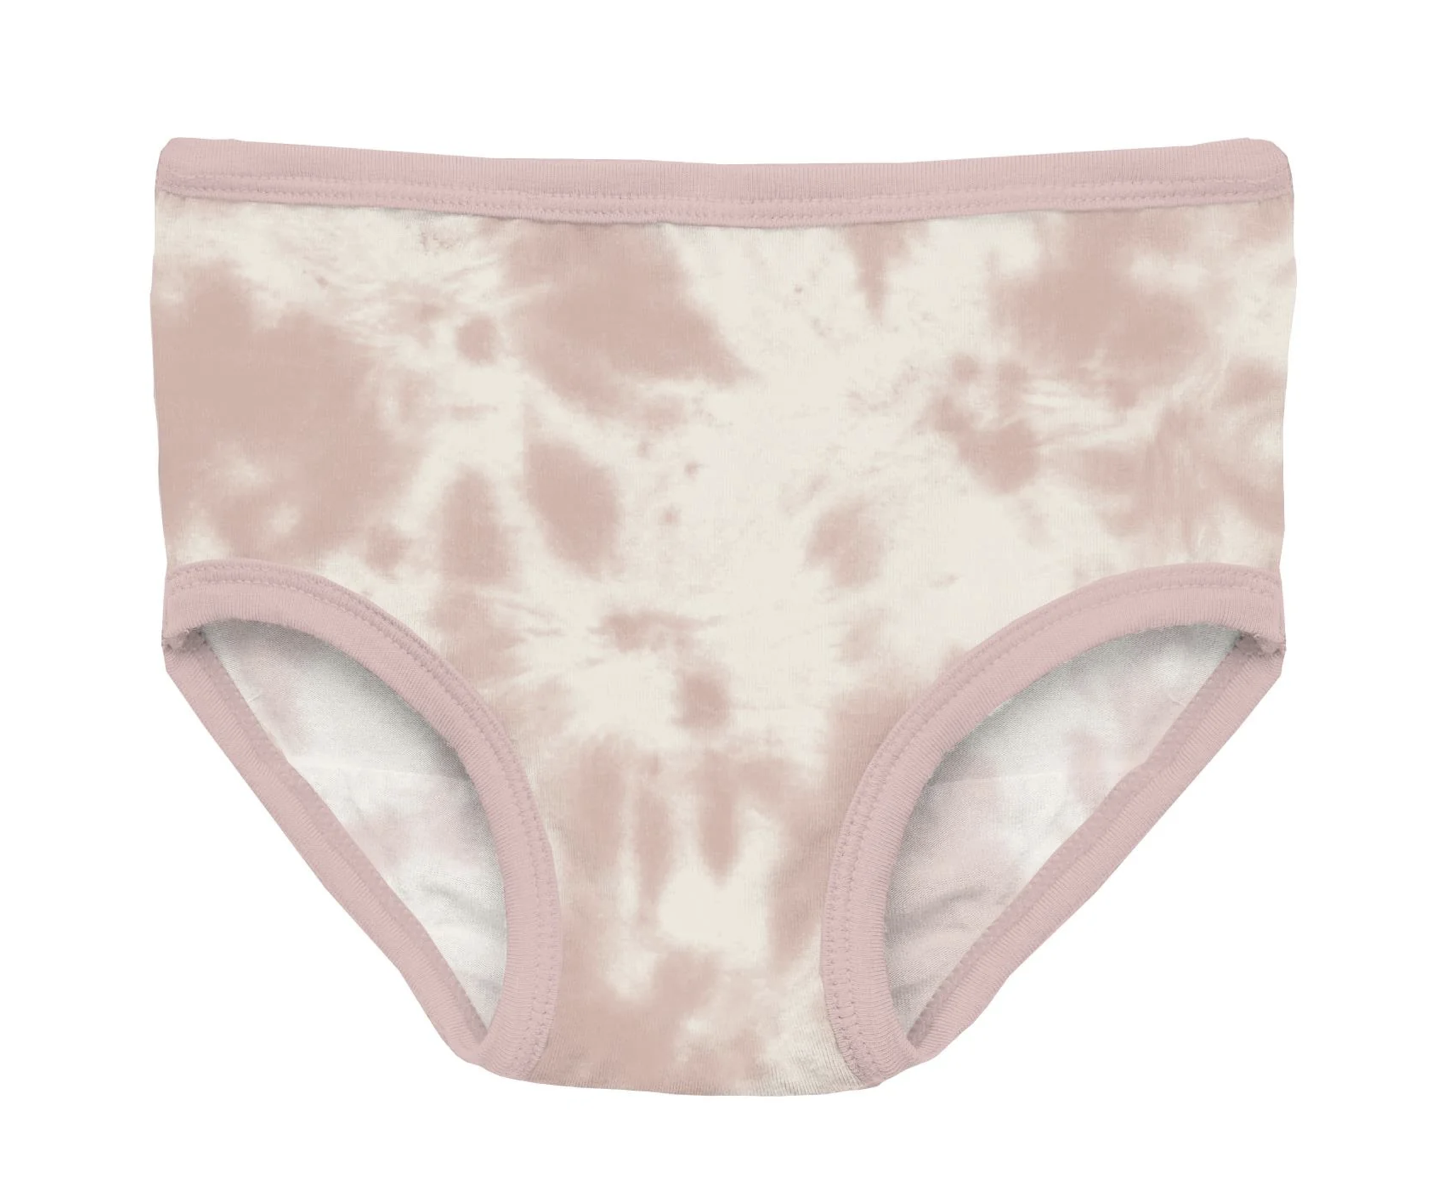 Kickee Pants Girls Print Underwear Set of 3 - Peace, Love and